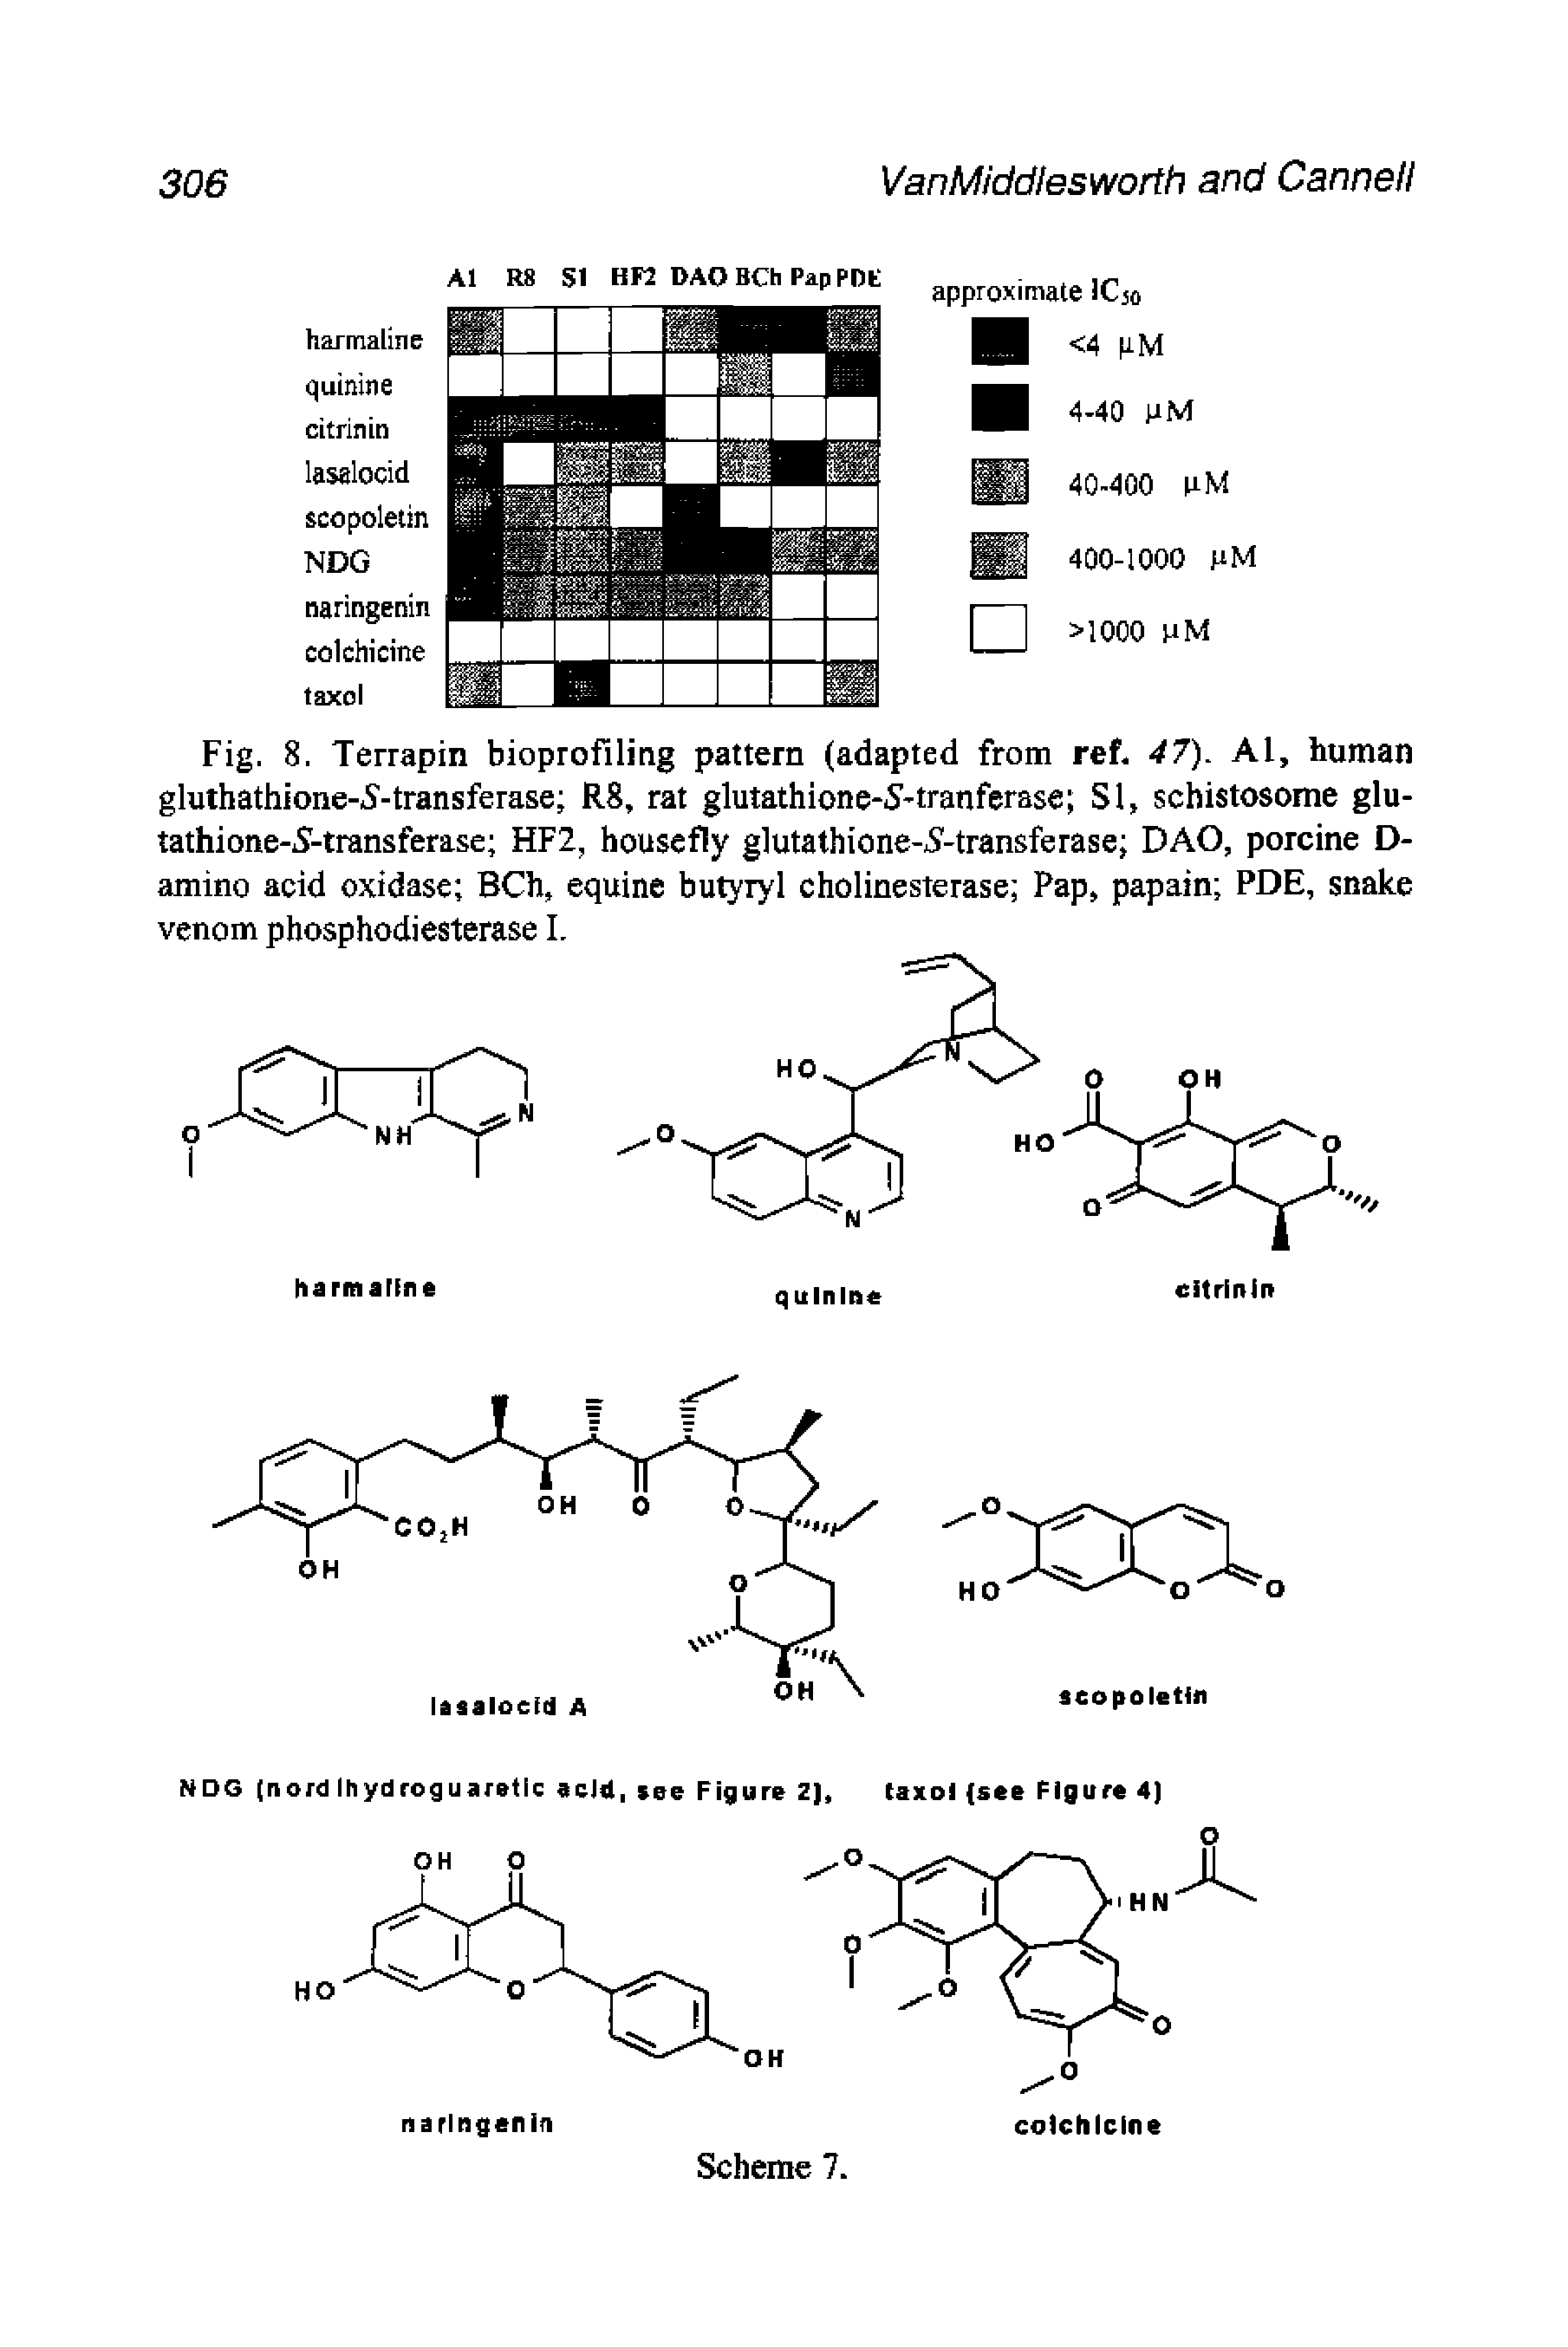 Fig. 8. Terrapin bioprofiling pattern (adapted from ref. 47). Al, human gluthathione-5-transferase R8, rat glutathione-S-tranferase SI, schistosome glu-tathione-5-transferase HF2, housefly glutathione-i -transferase DAO, porcine D-amino acid oxidase BCh, equine butyryl cholinesterase Pap, papain PDE, snake venom phosphodiesterase I.